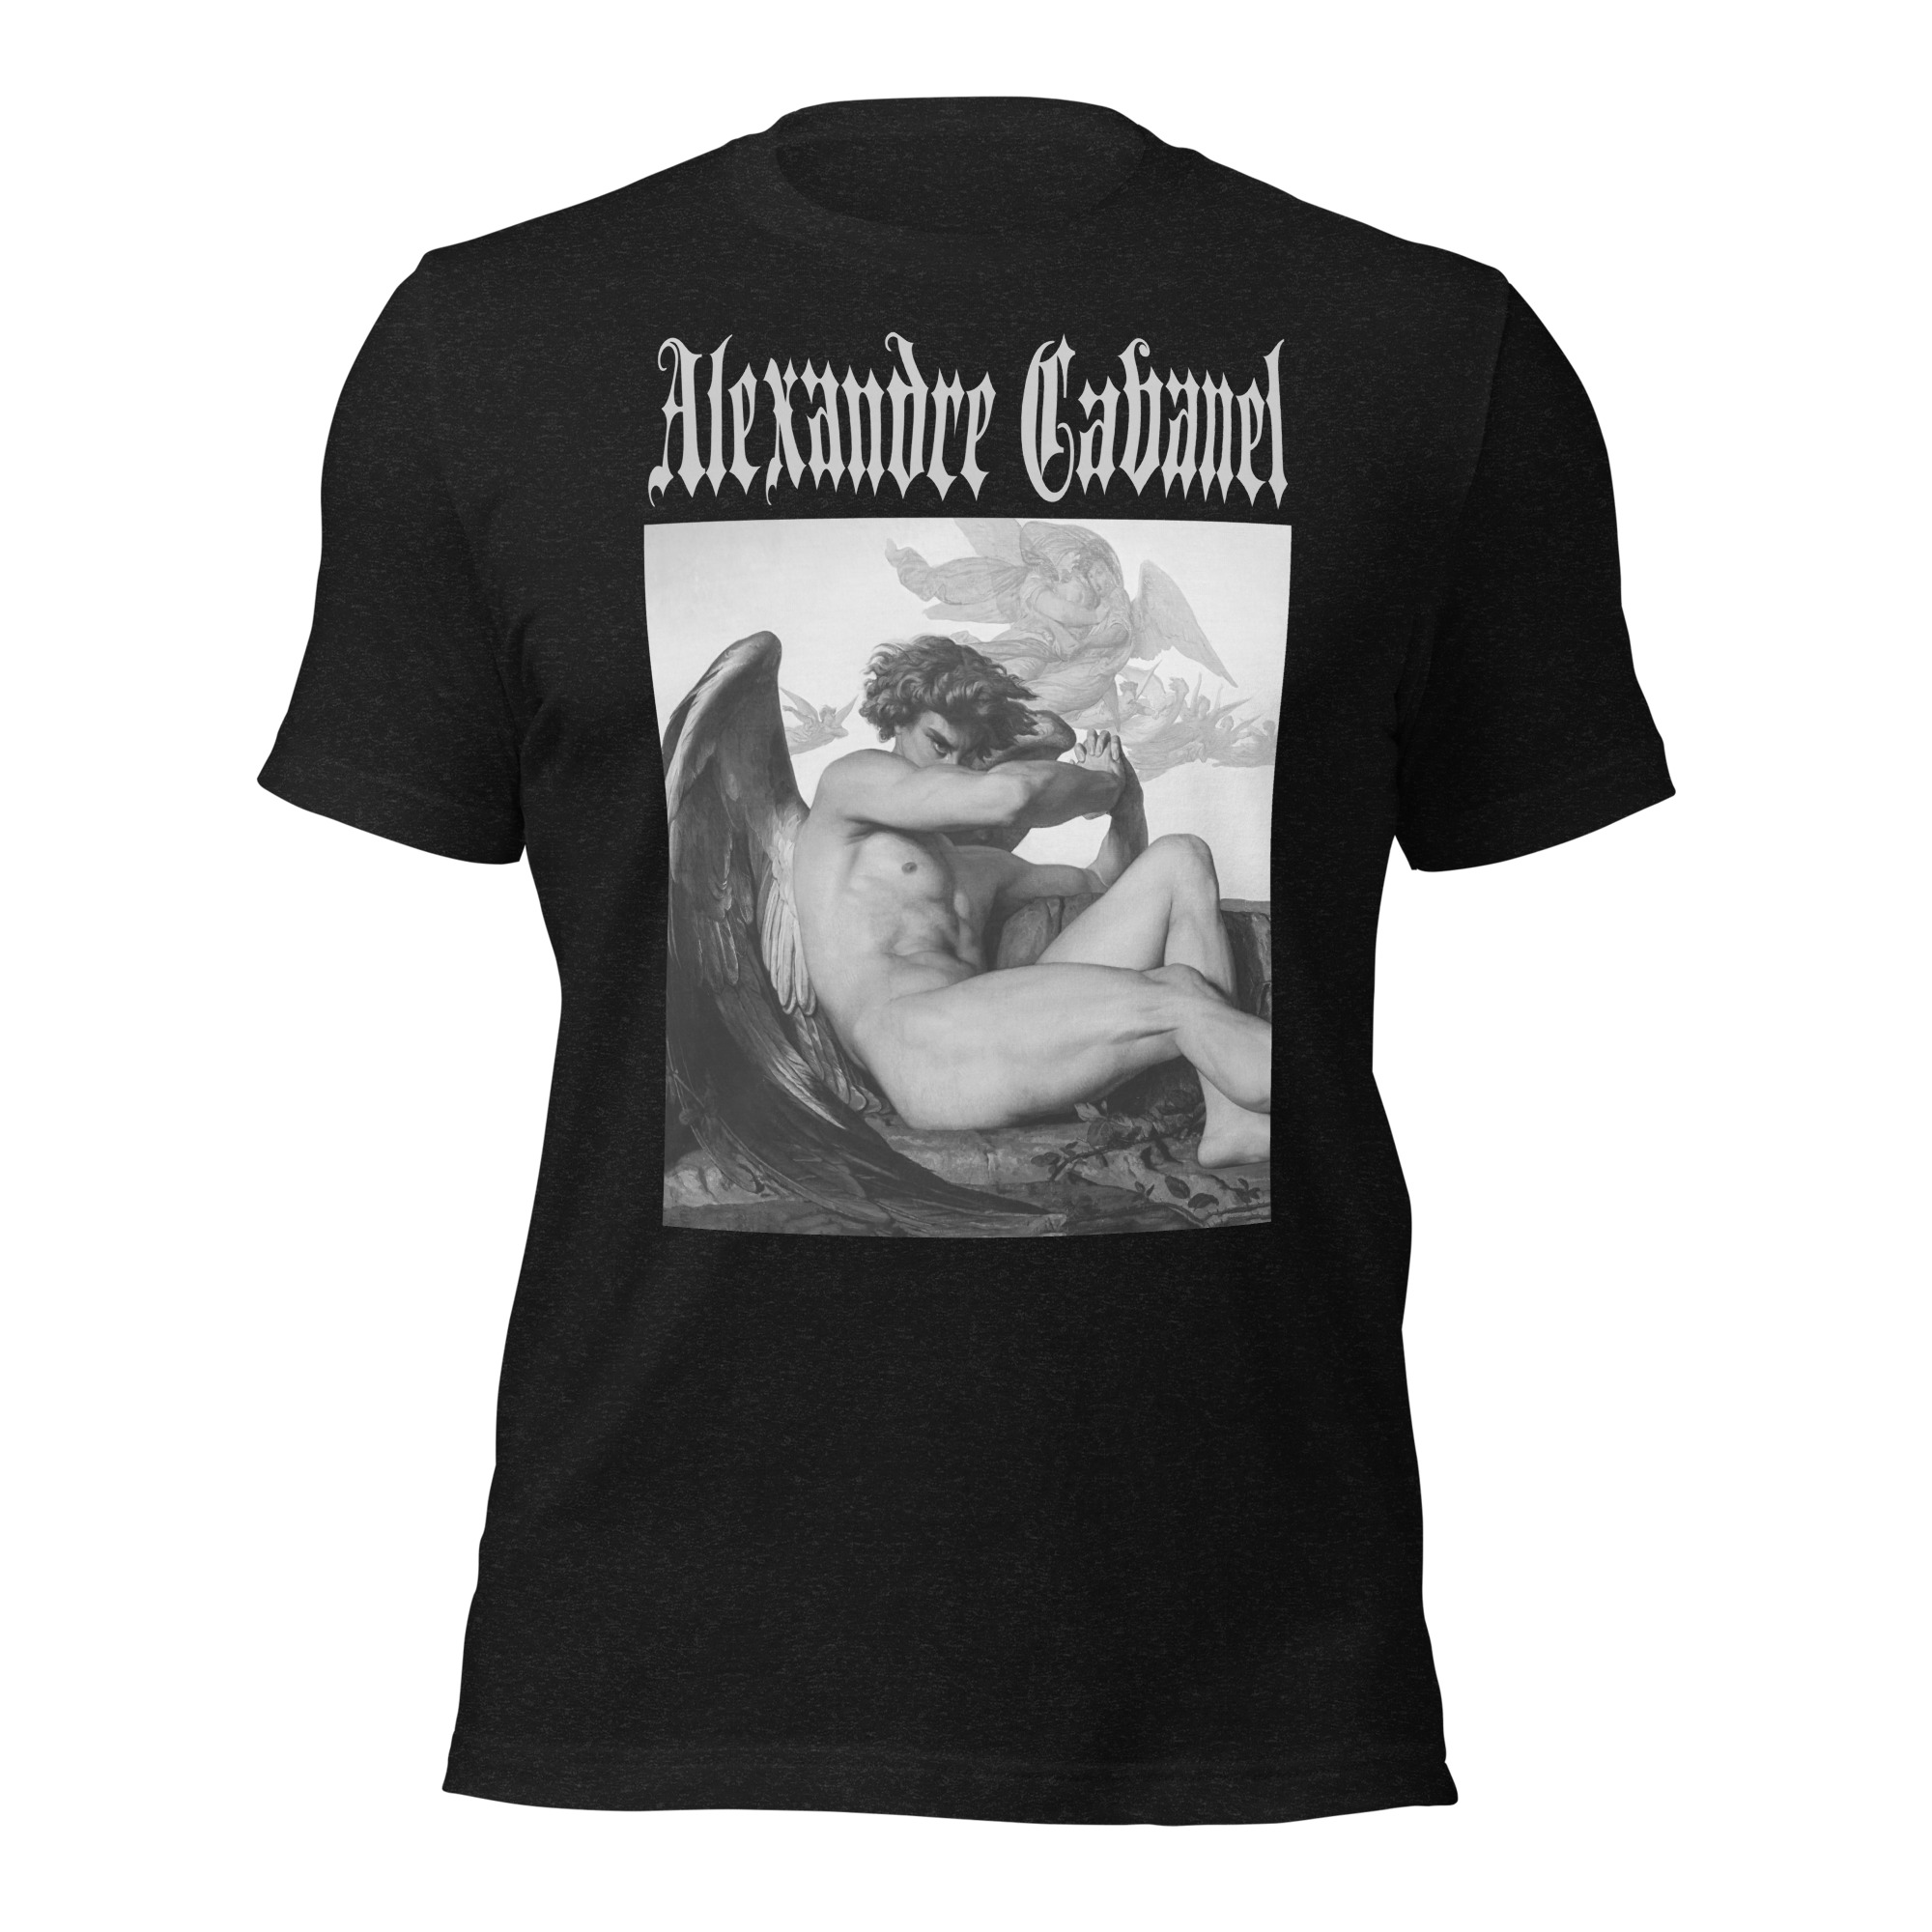 Featured image for “Fallen Angel - ALEXANDRE CABANEL ( Black & White )  - Unisex t-shirt”